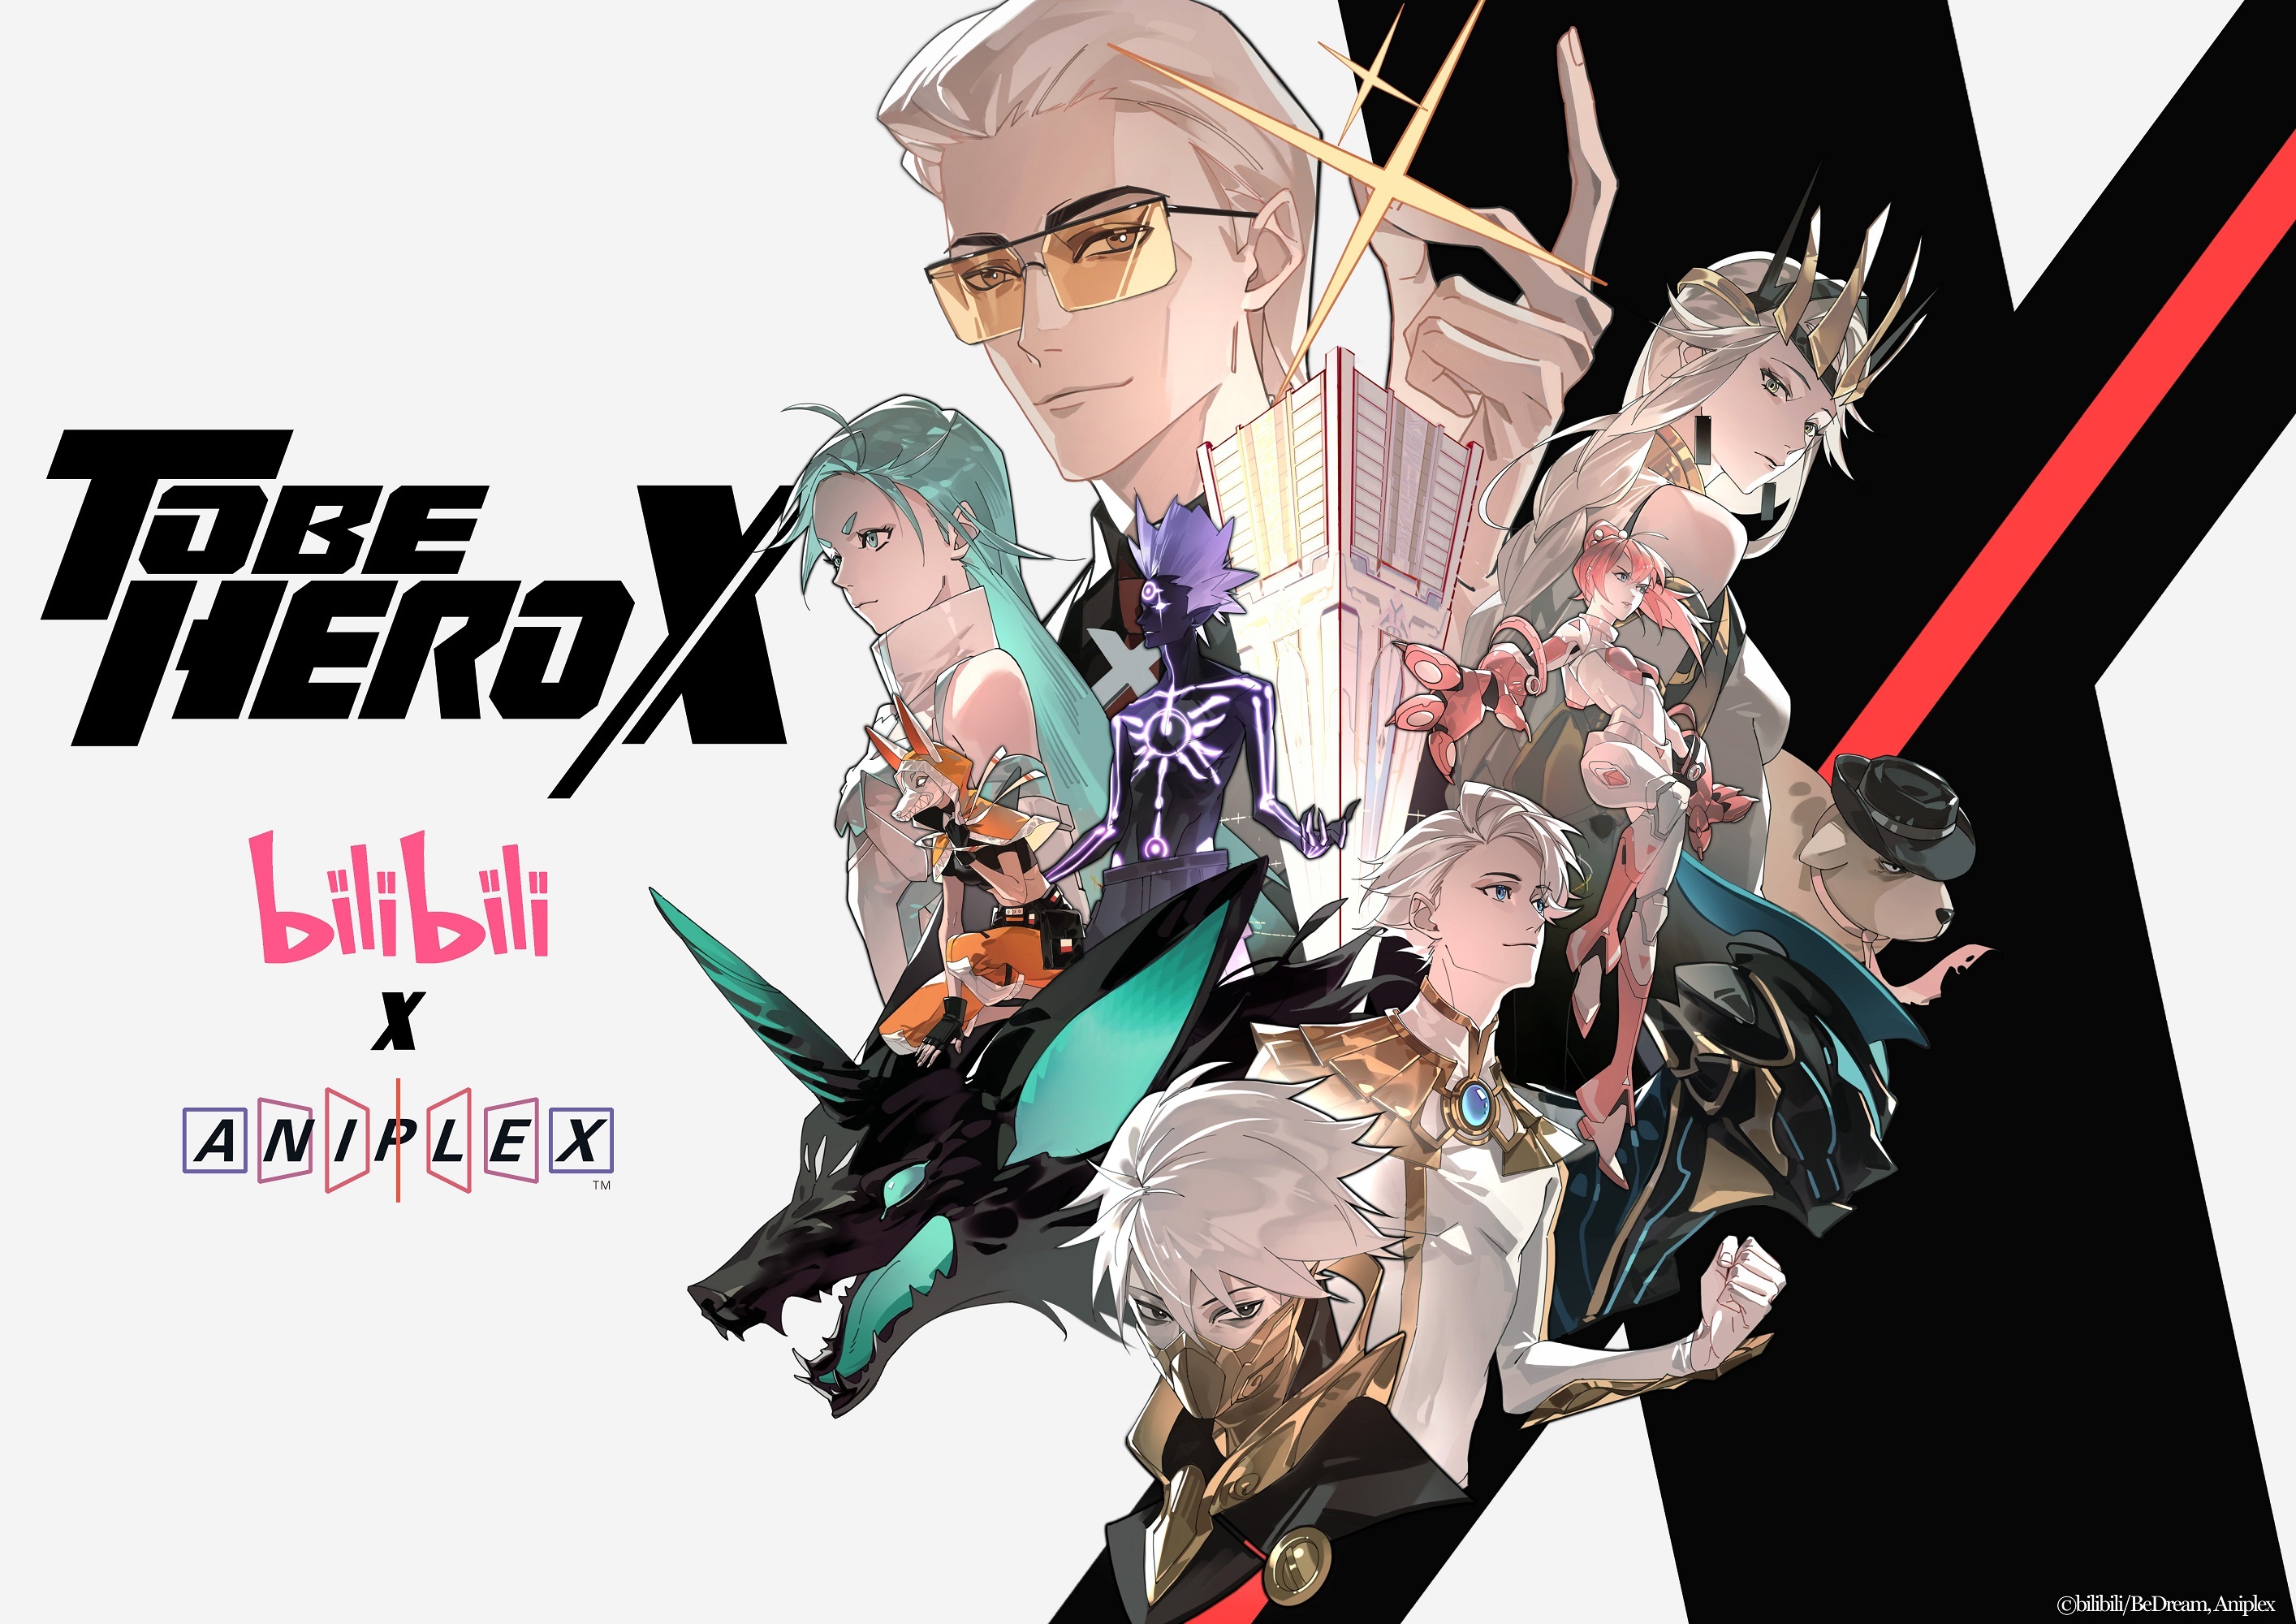 bilibli × Aniplex 原创动画《凸变英雄X / TO BE HERO X》公开先导 PV 及视觉图-二次元COS分享次元吧